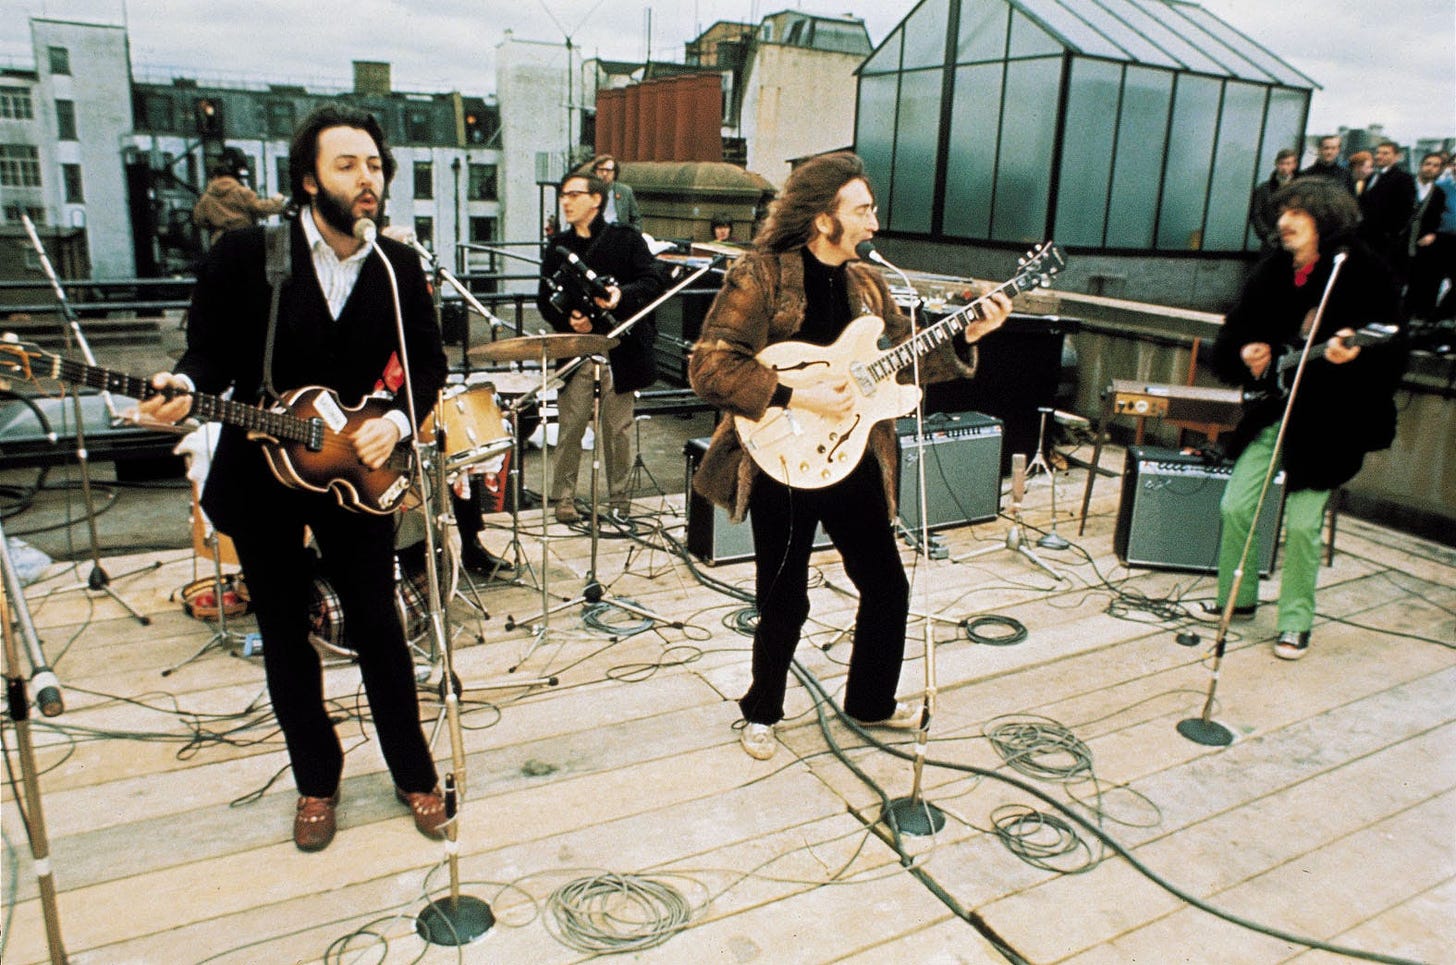 Today in History, Jan. 30, 1969: Beatles gave last concert in London